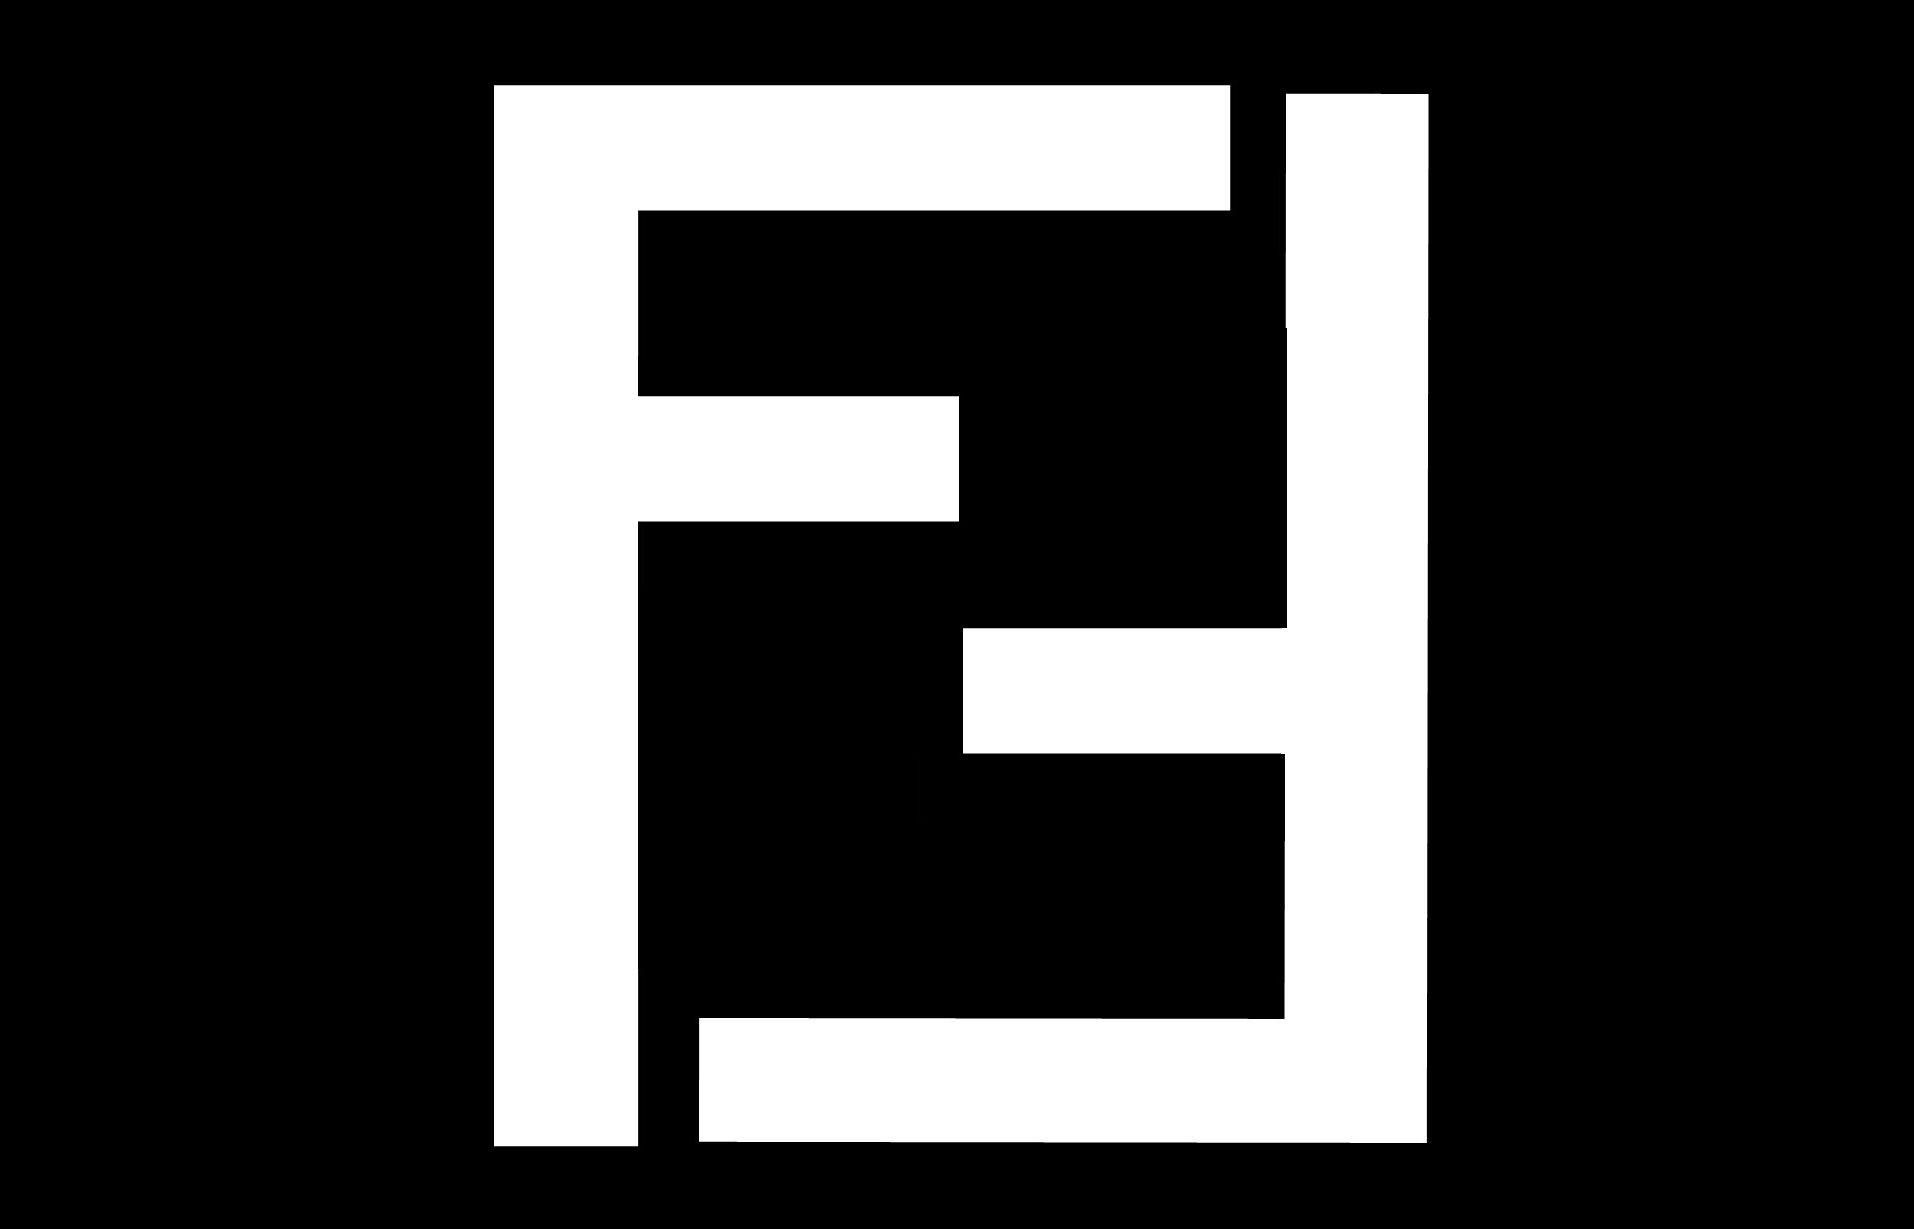 Double F Logo - Fendi Logo, Fendi Symbol Meaning, History and Evolution